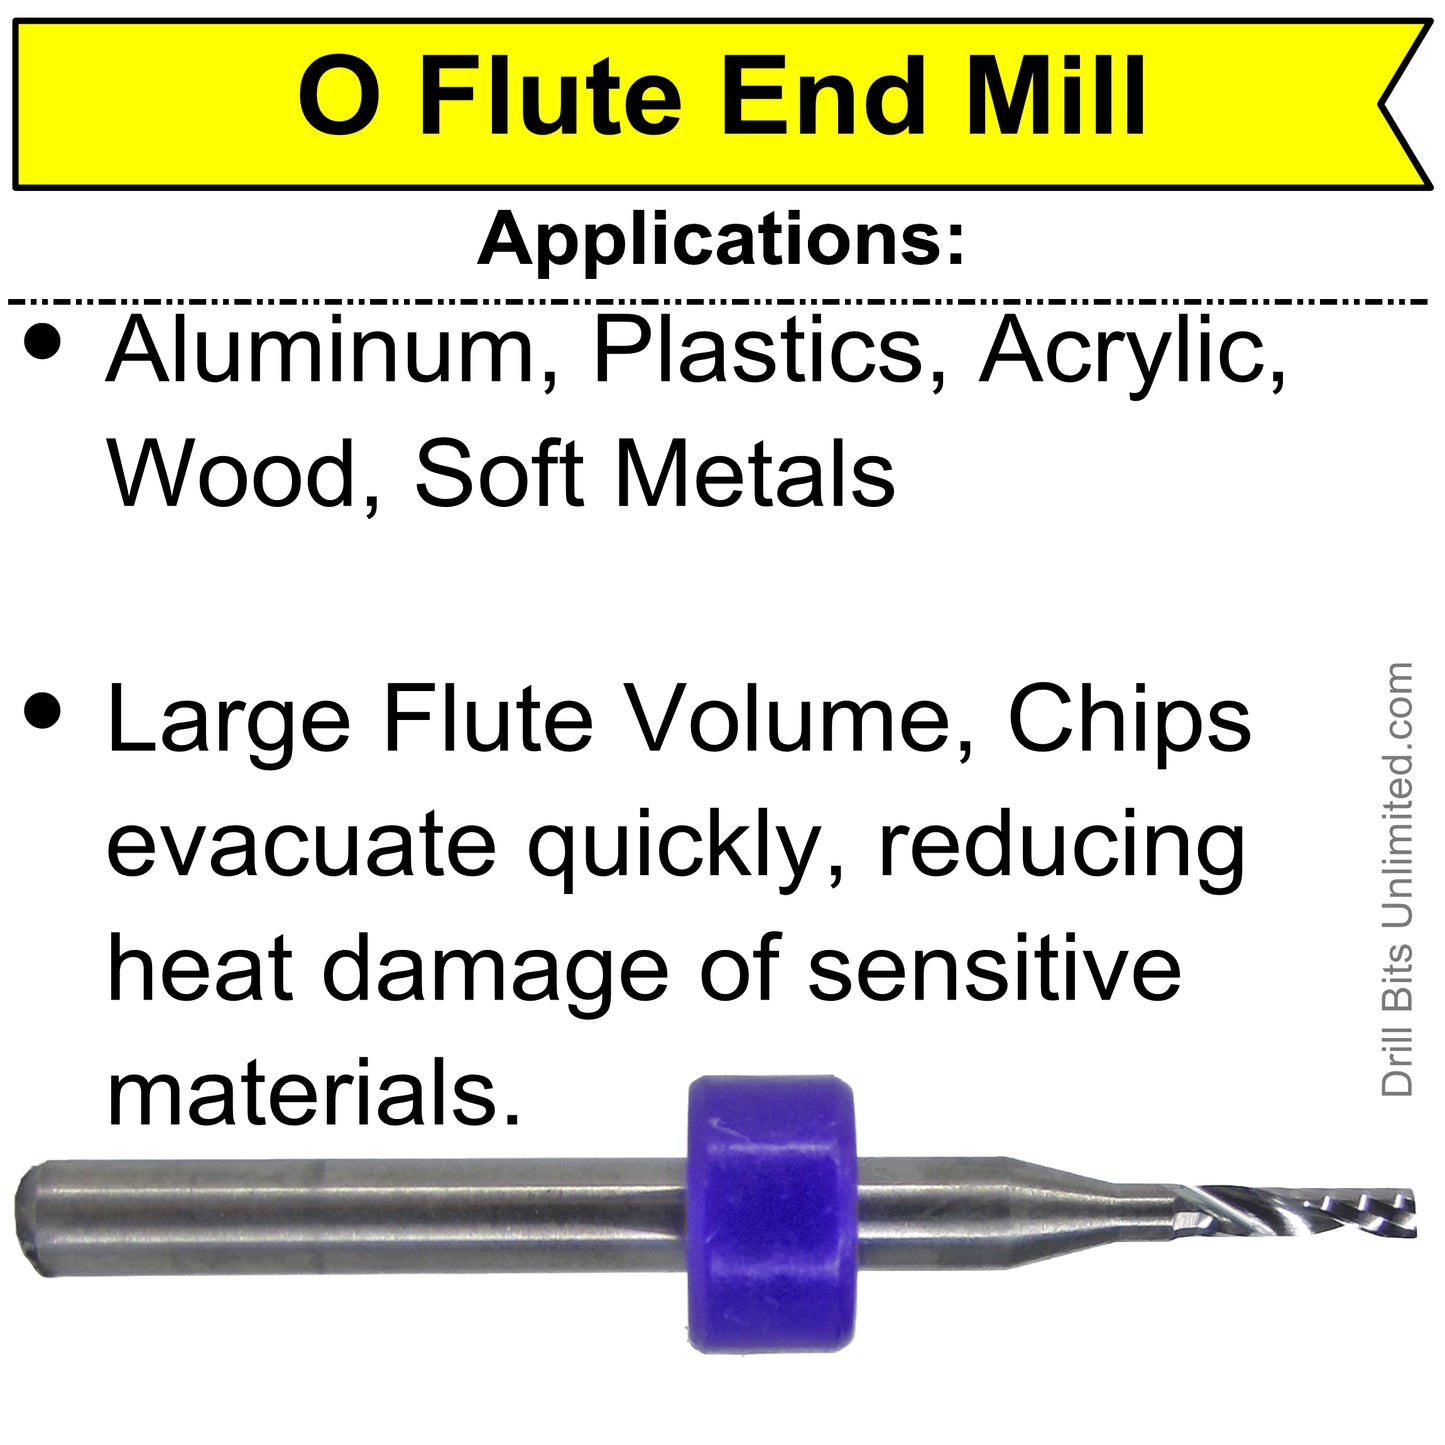 1/8" x 1.00" Depth O-Flute Carbide End Mill for Wood Aluminum Plastic M122